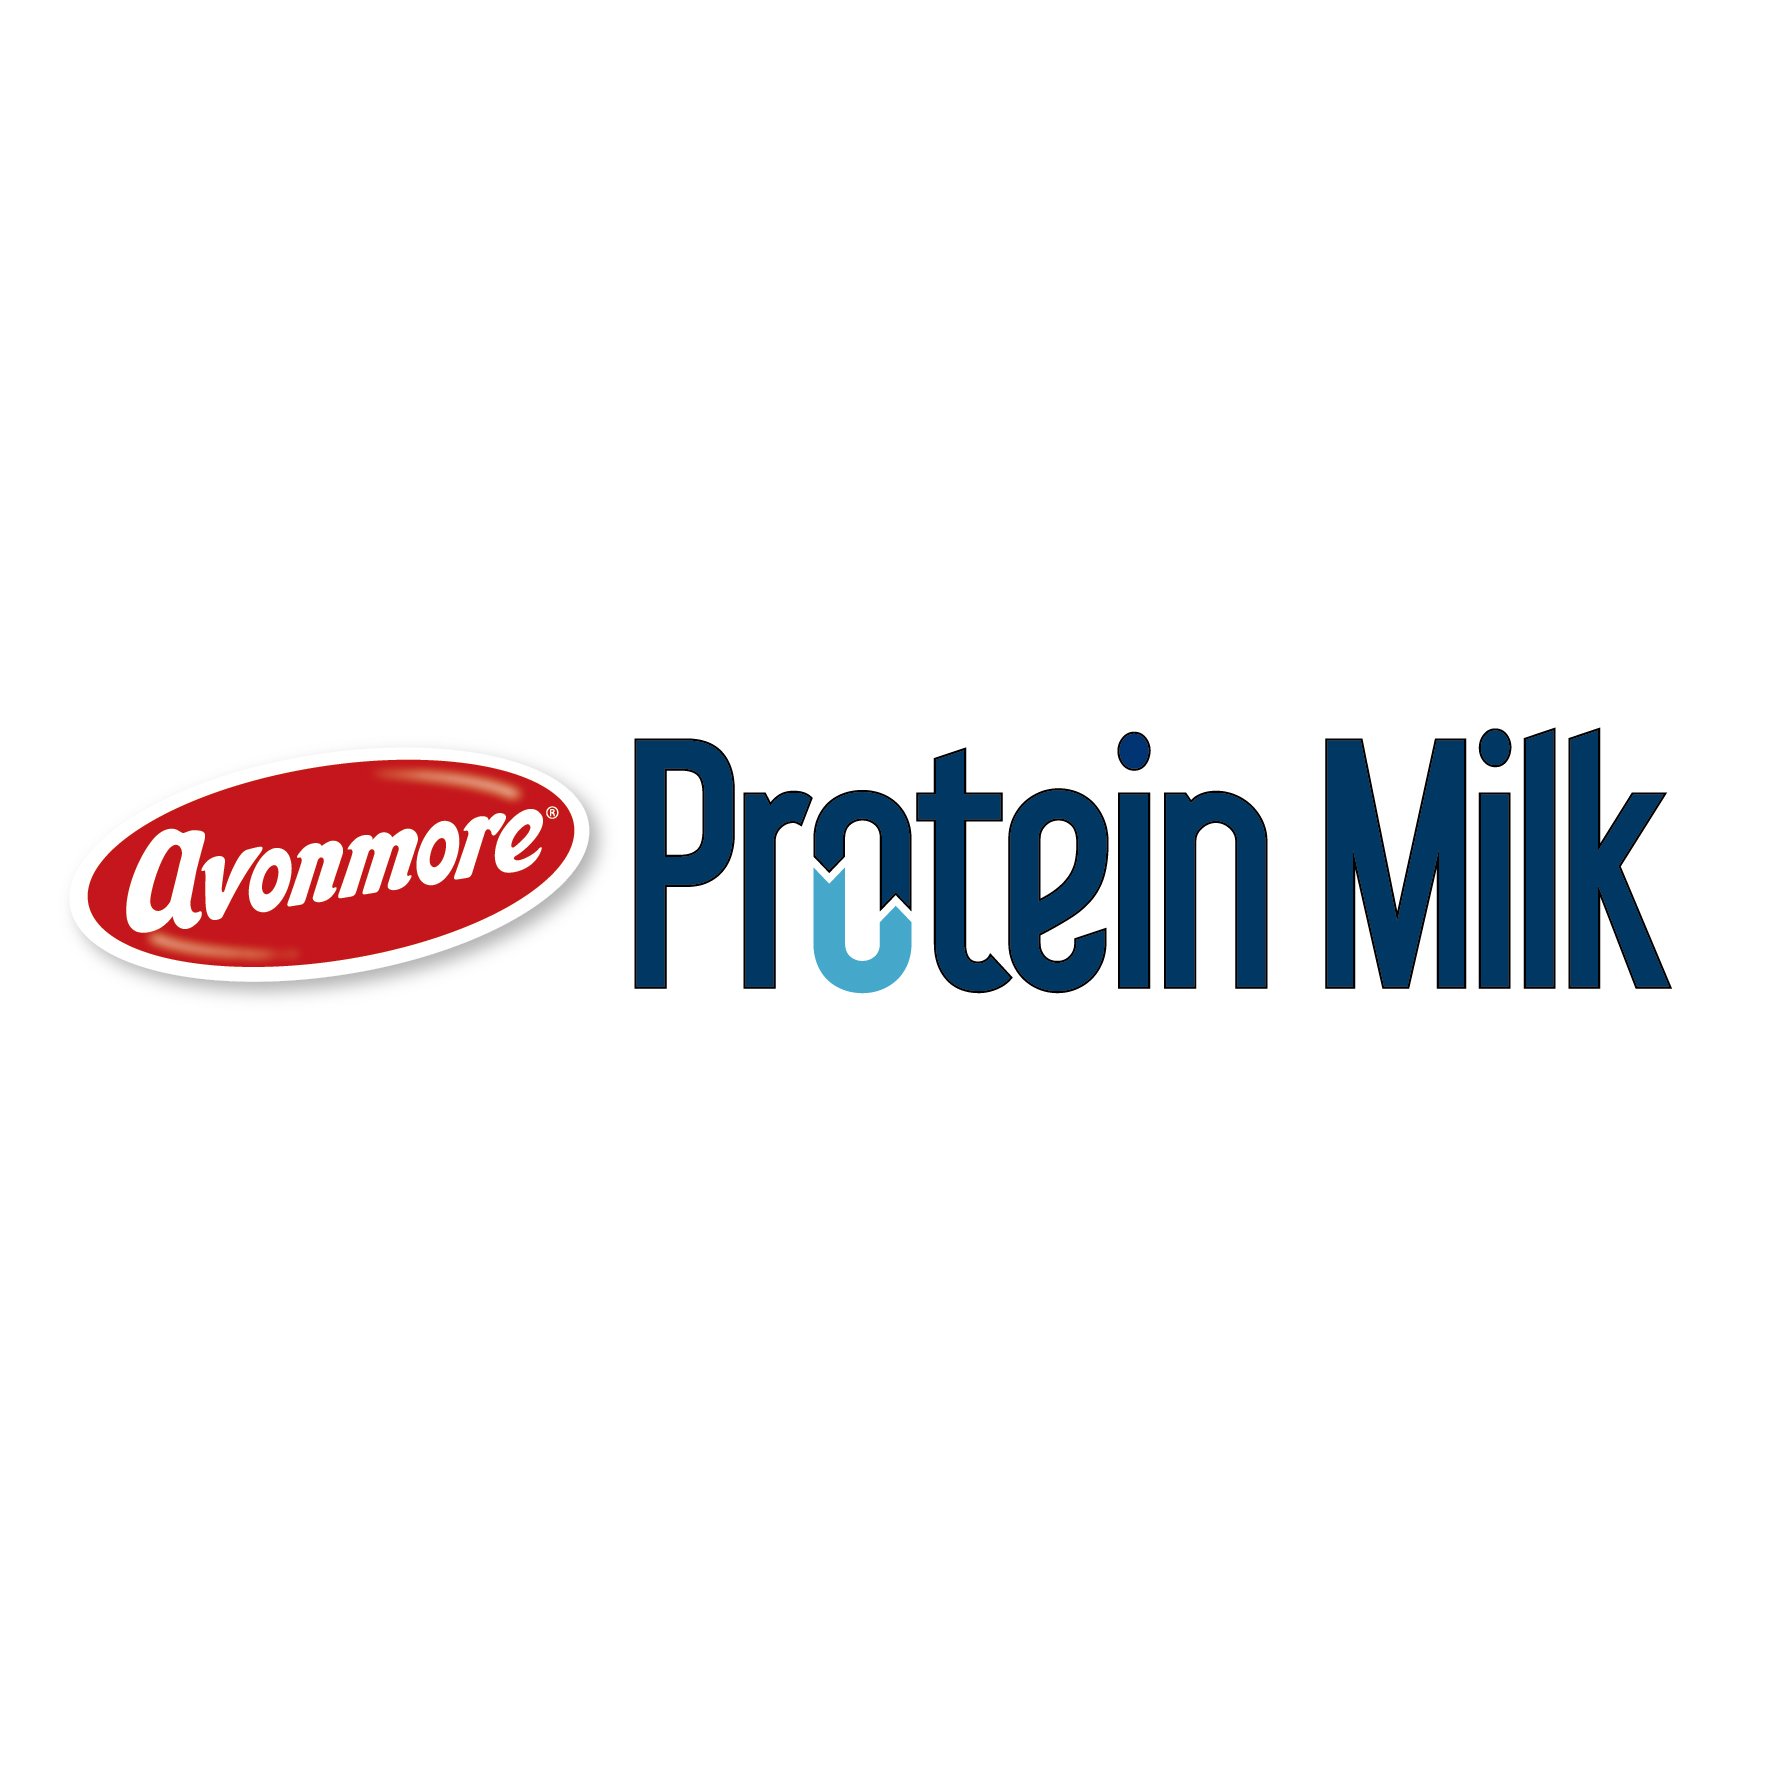 Avonmore Protein Milk logo